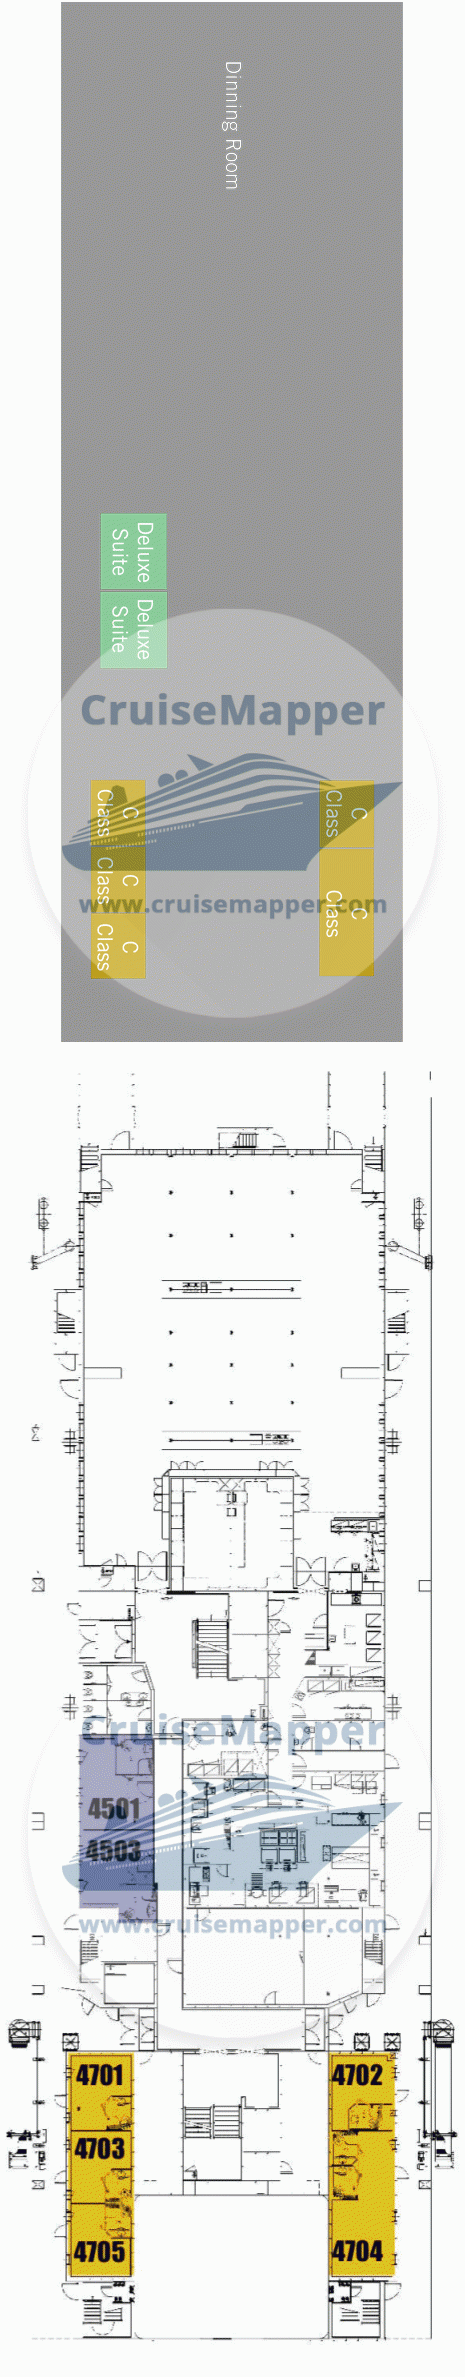 Aranui 5 Deck 04 - Upper